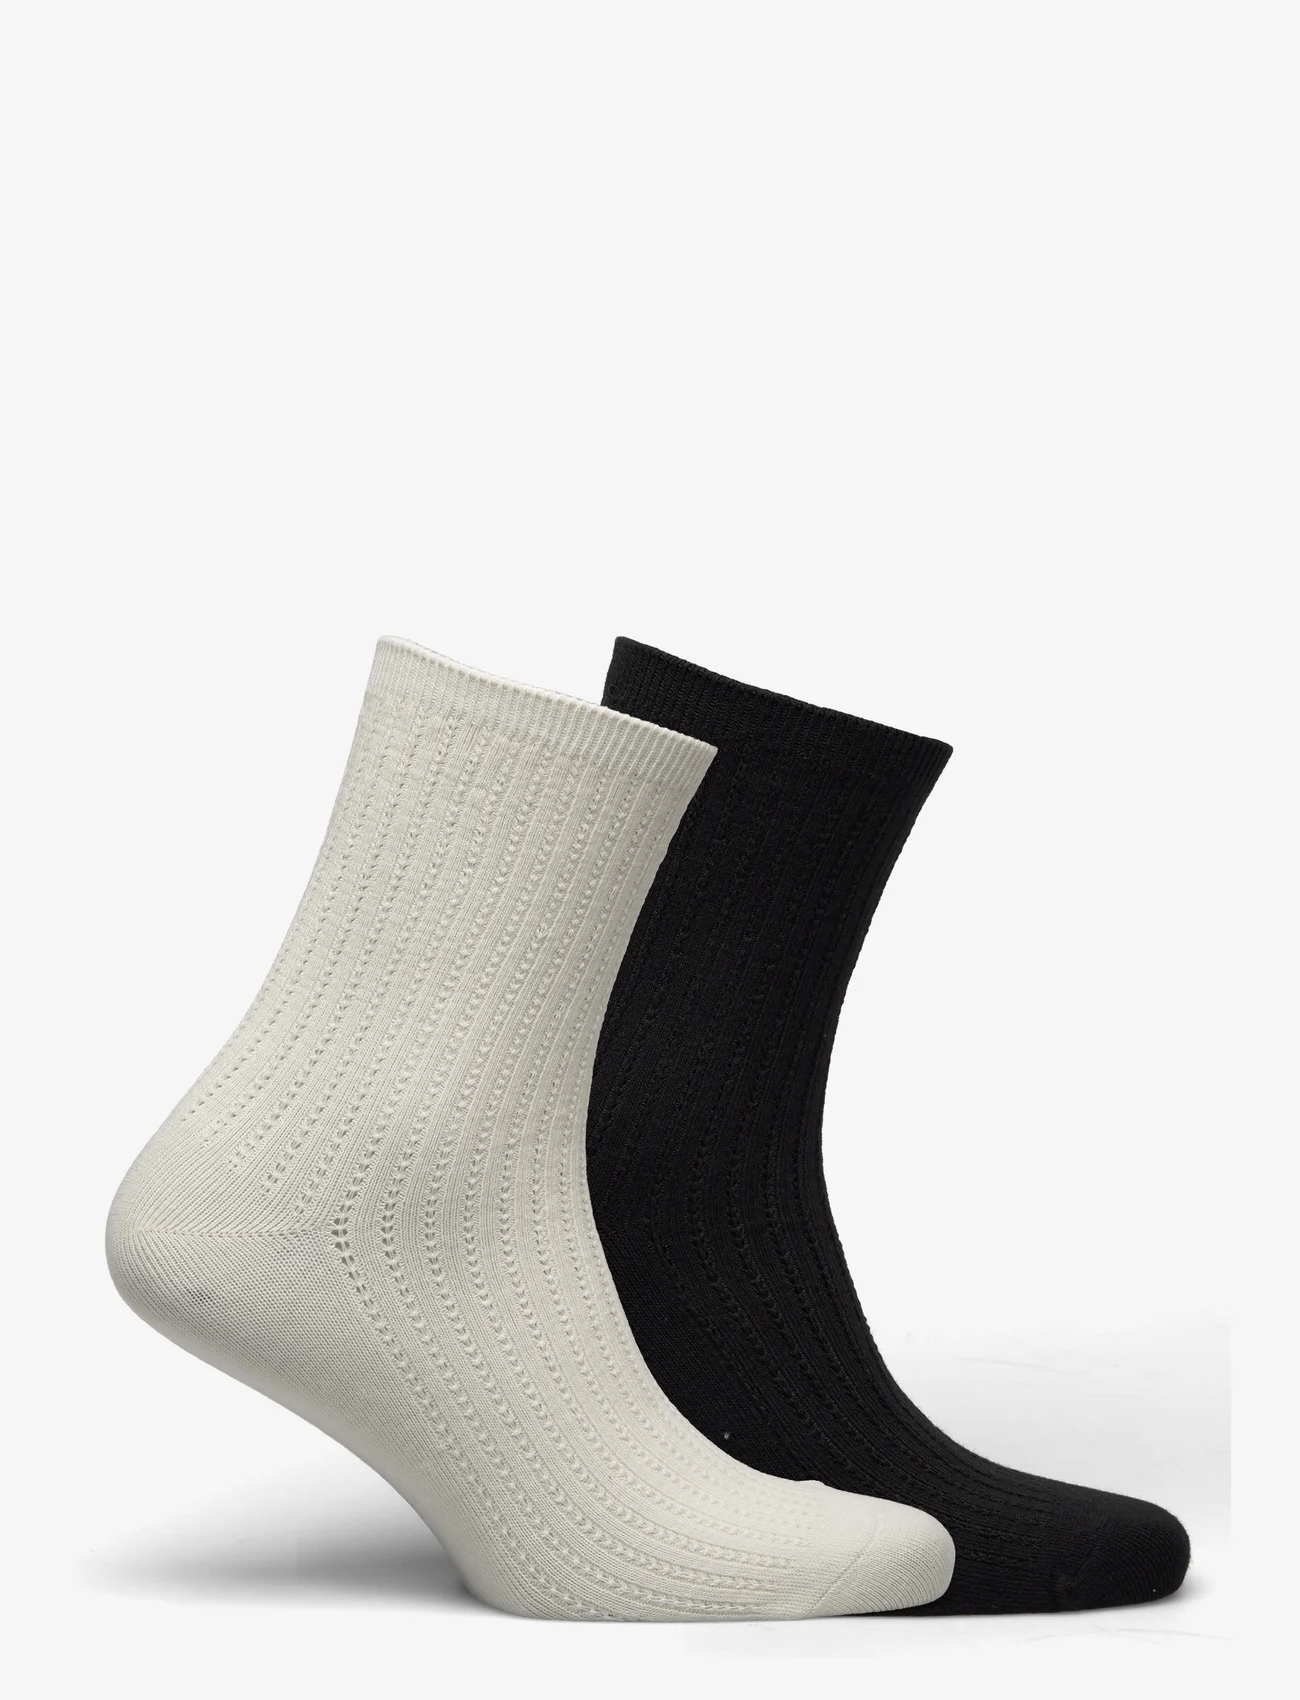 Becksöndergaard - Helga Crochet Sock 2 Pack - lägsta priserna - black/white - 1